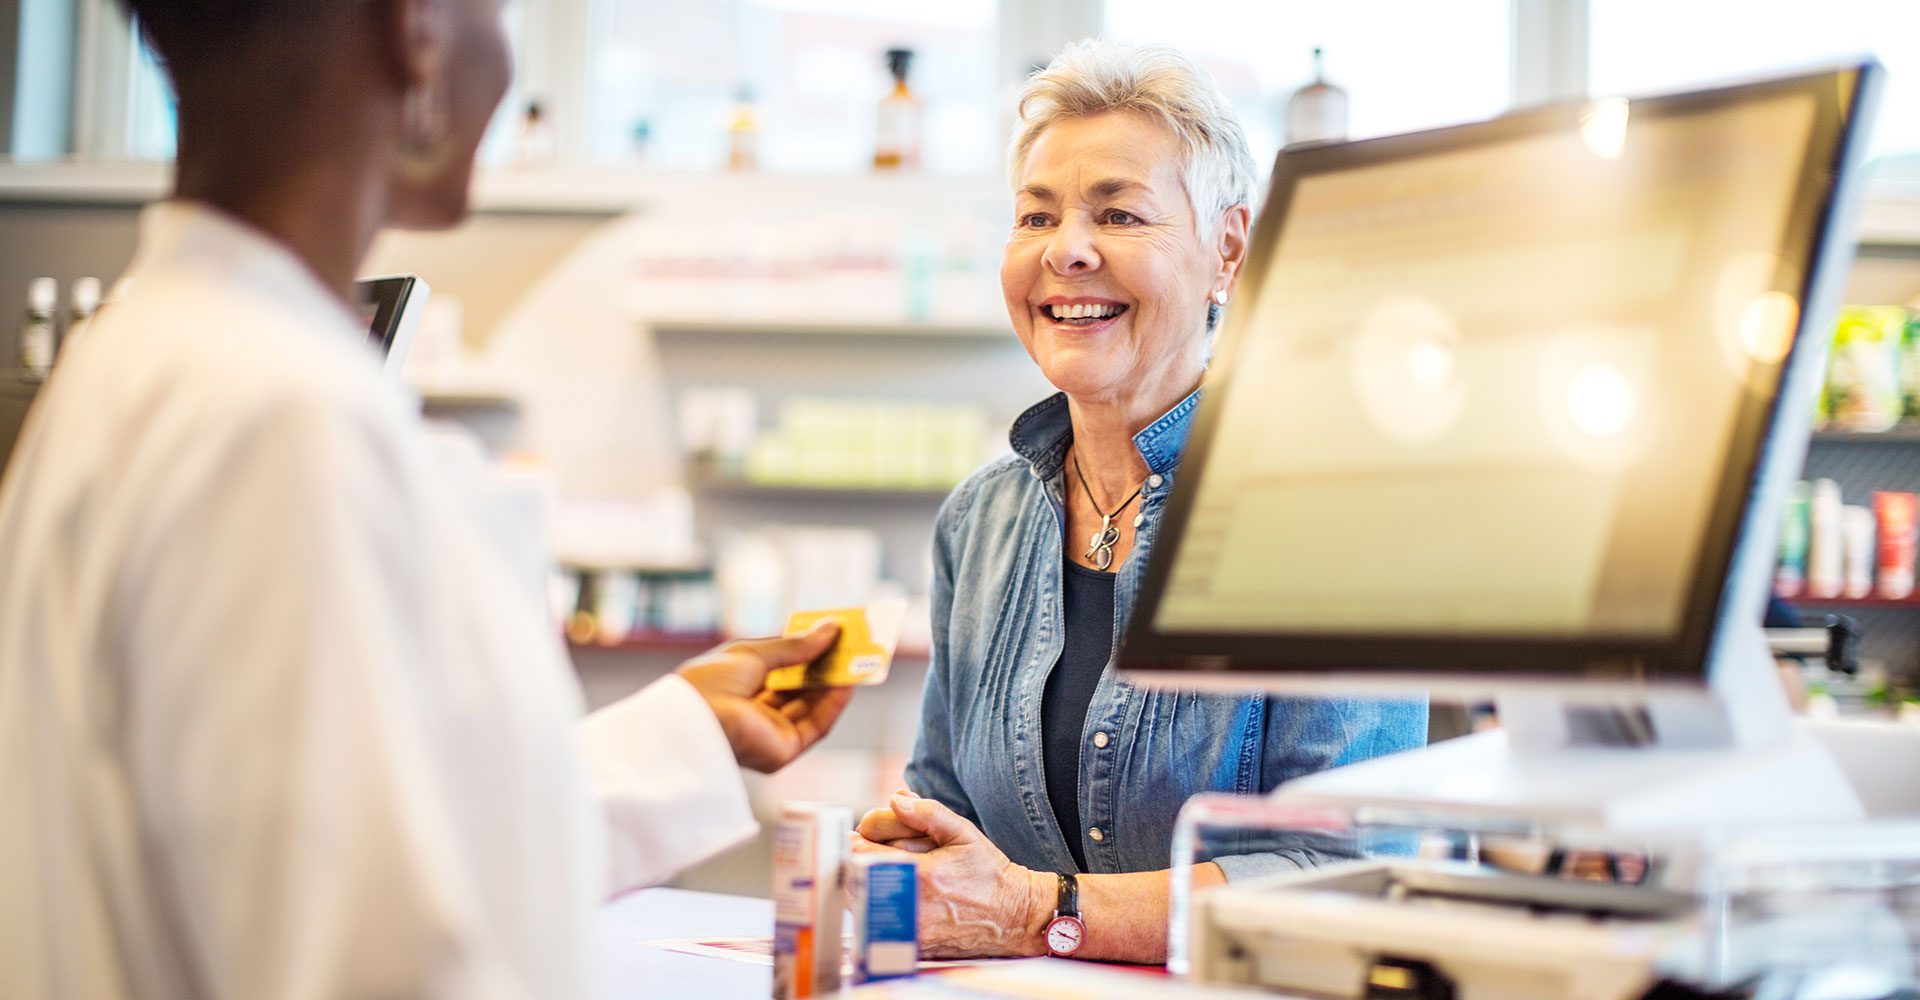 Customer speaking to pharmacist at prescription counter